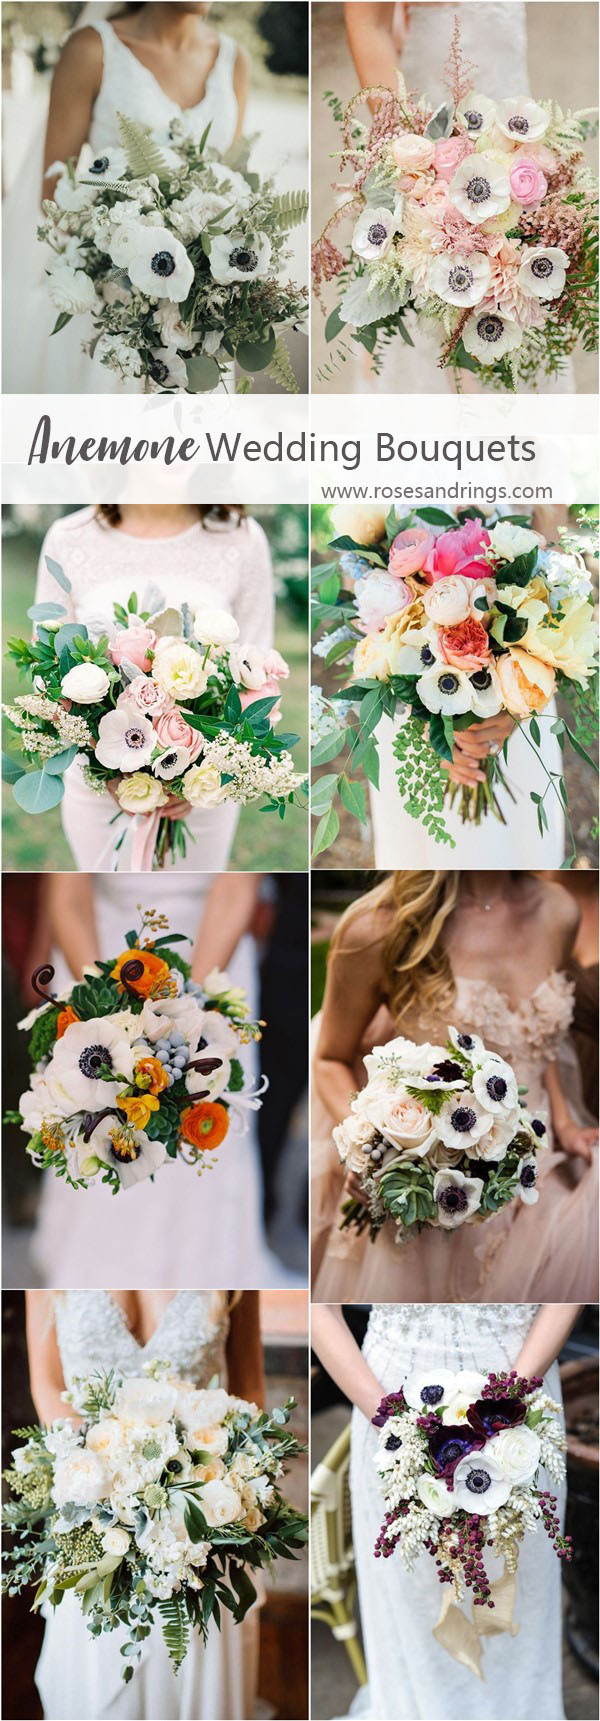 wedding flower trends - white and black anemone wedding flower bouquets